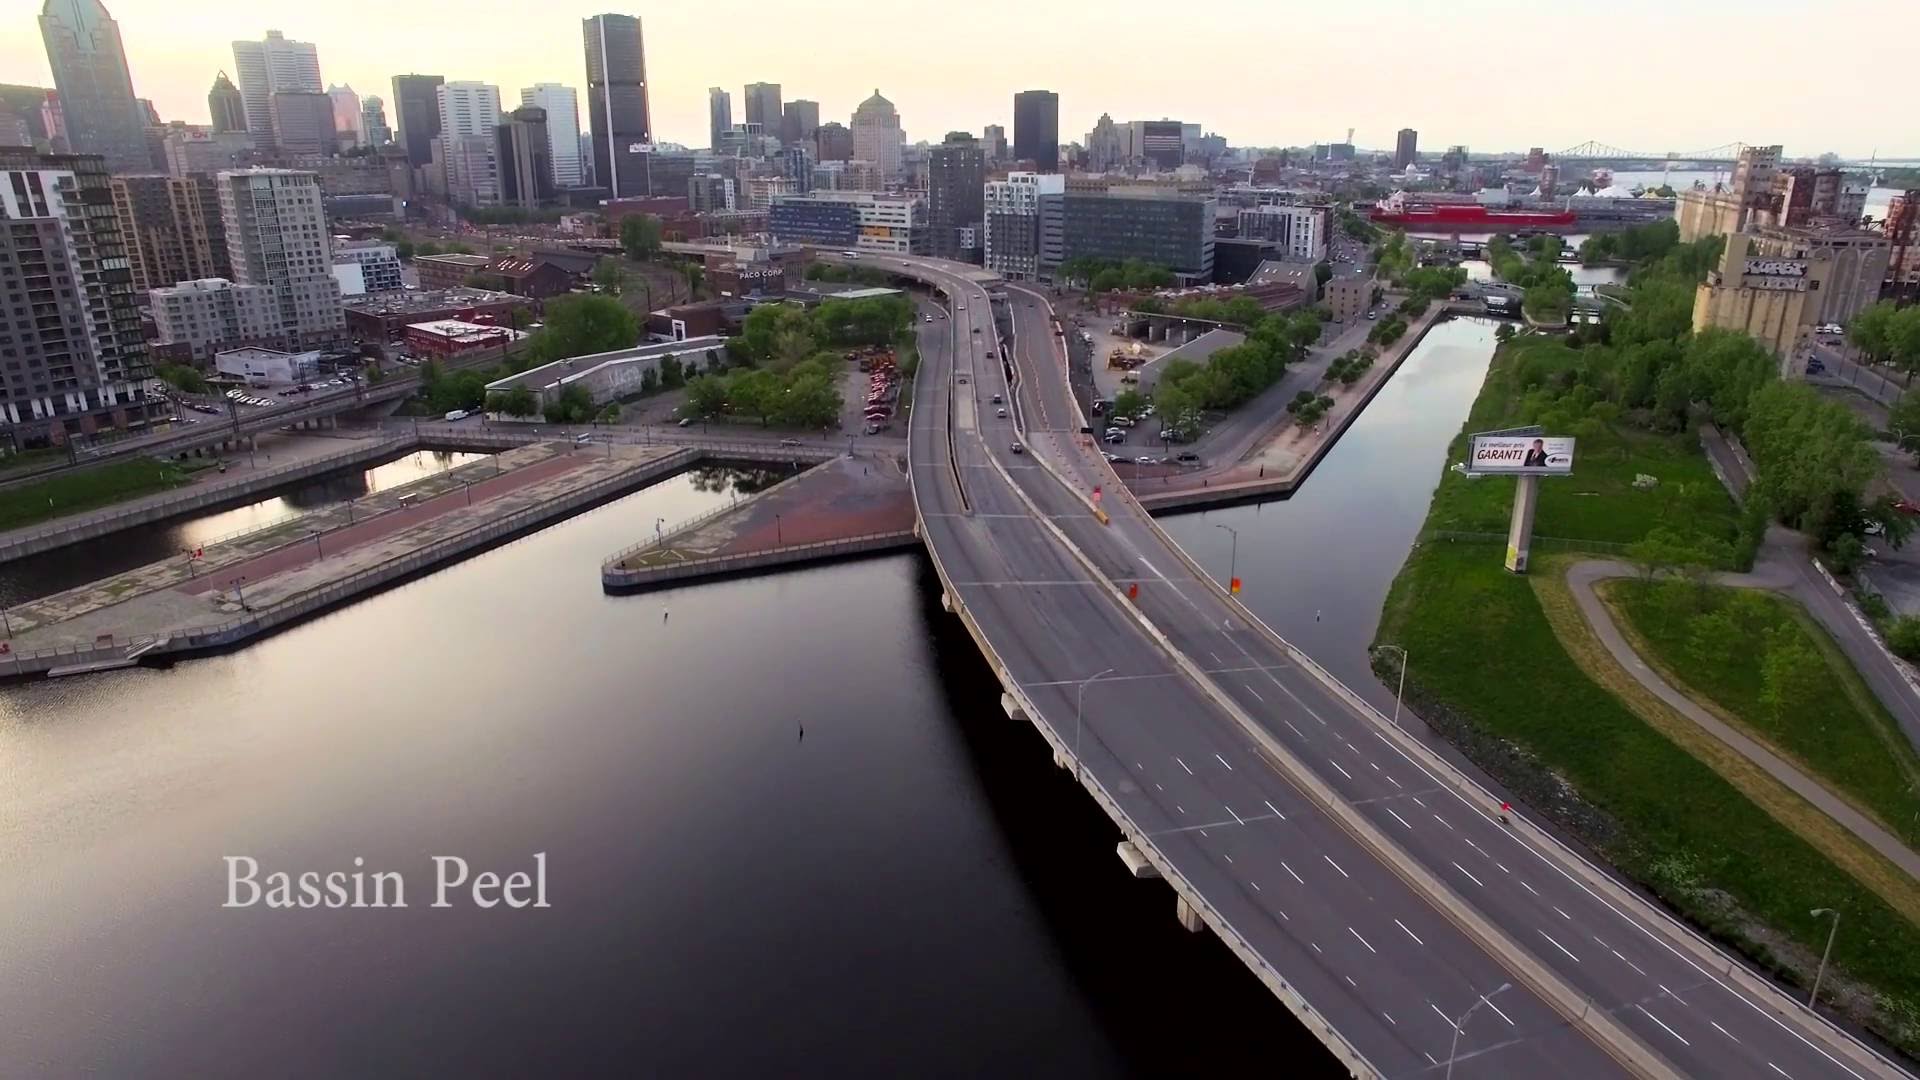 DJI Phantom 3 Professional - Peel Basin, Montreal - YouTube